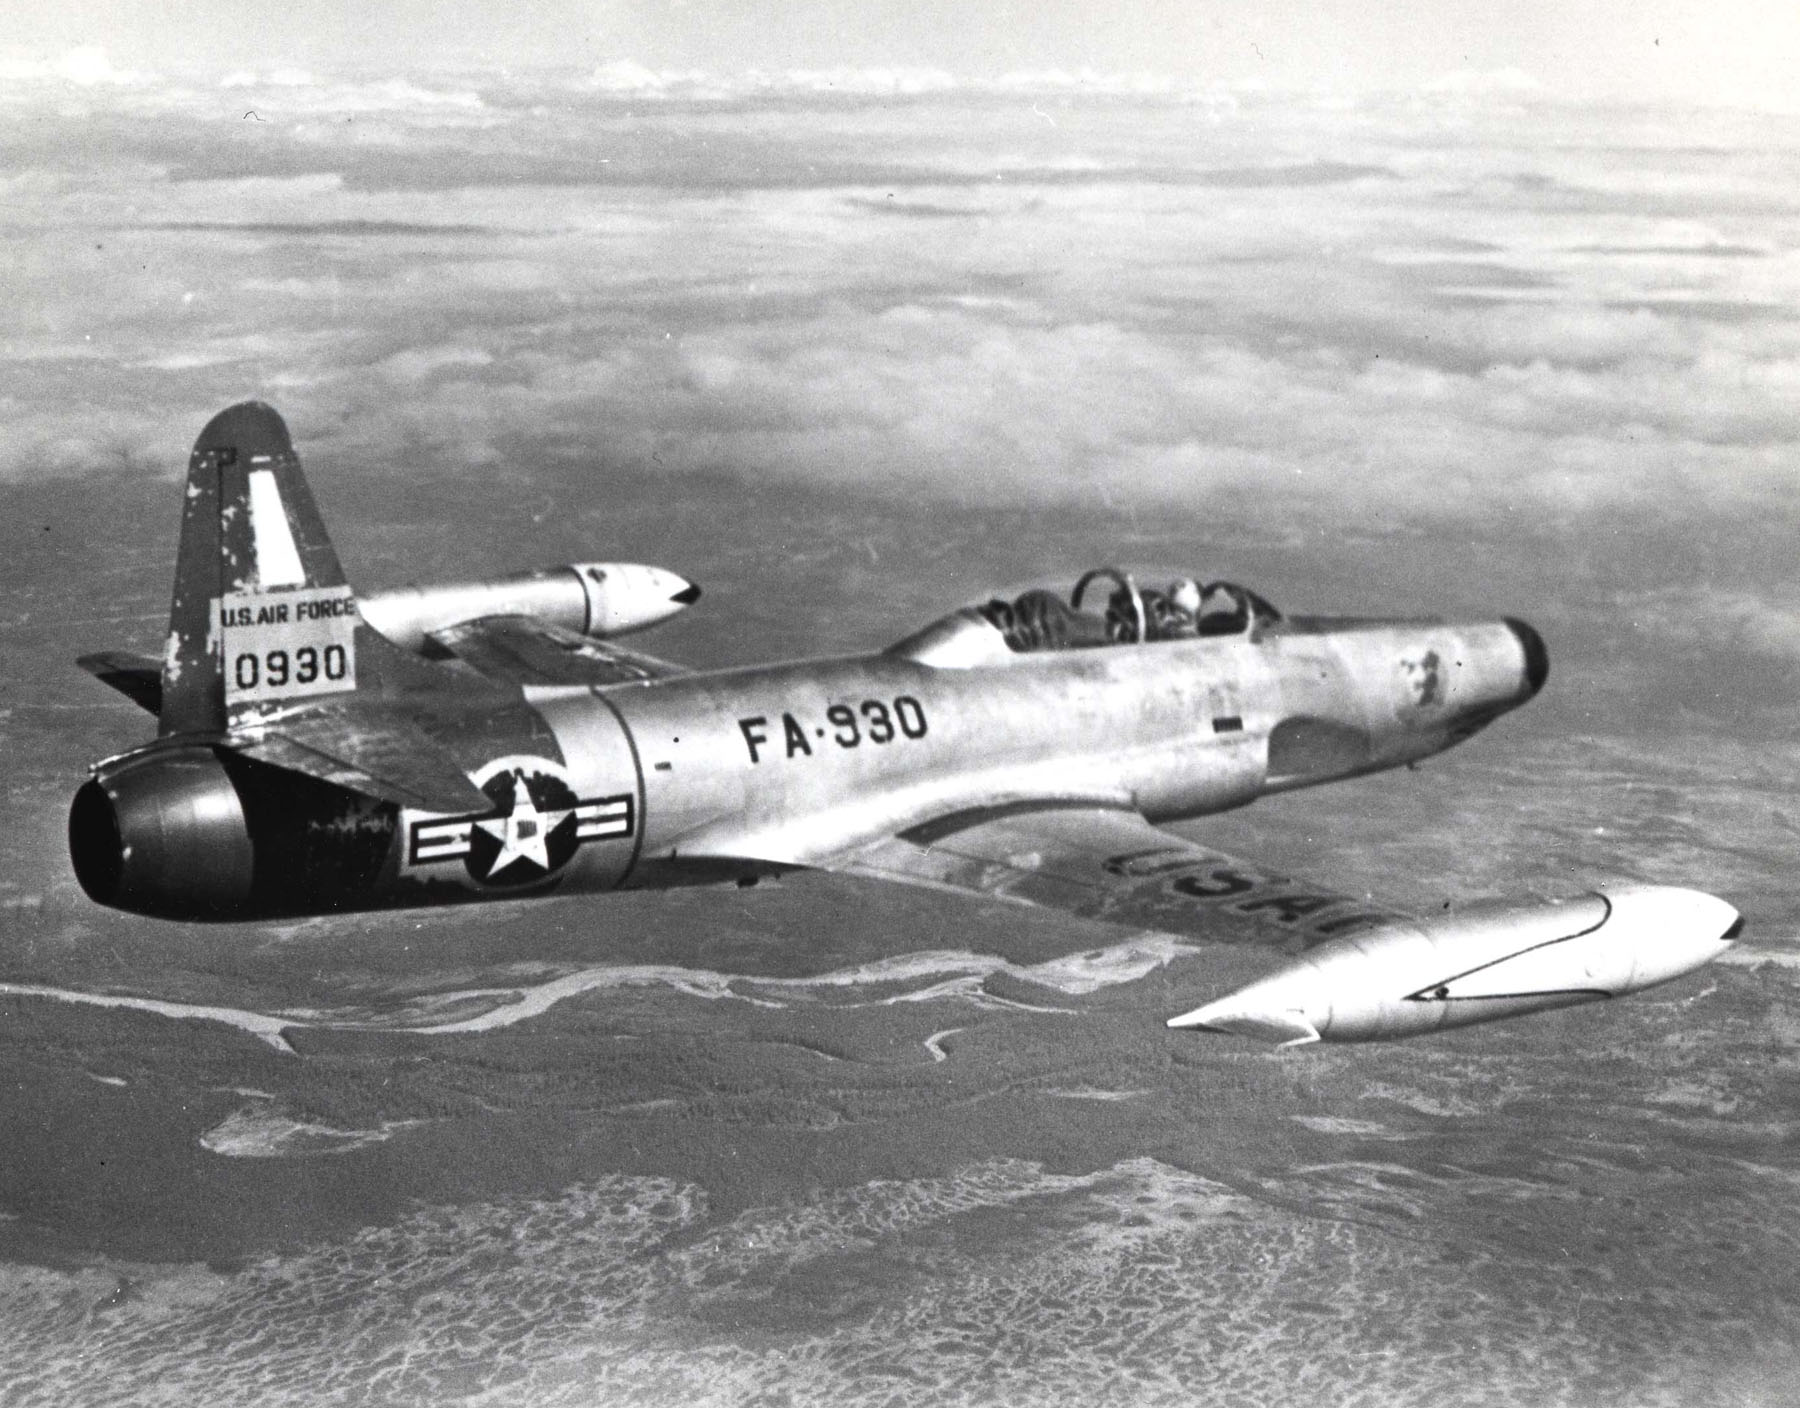 F-94 starfire